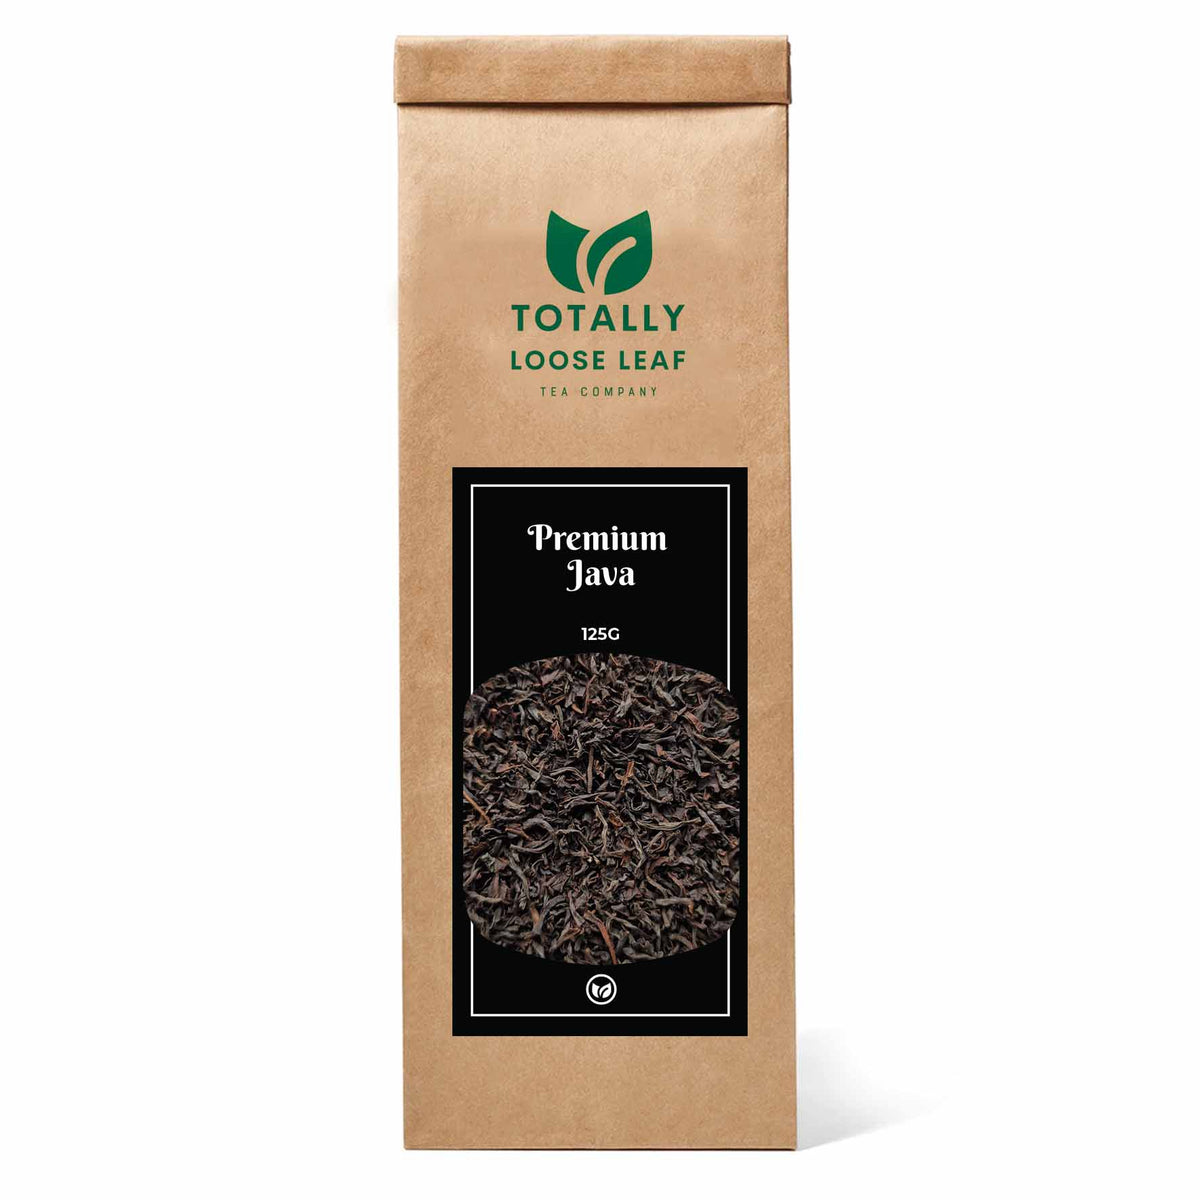 Premium Java Black Estate Loose Leaf Tea - one pouch